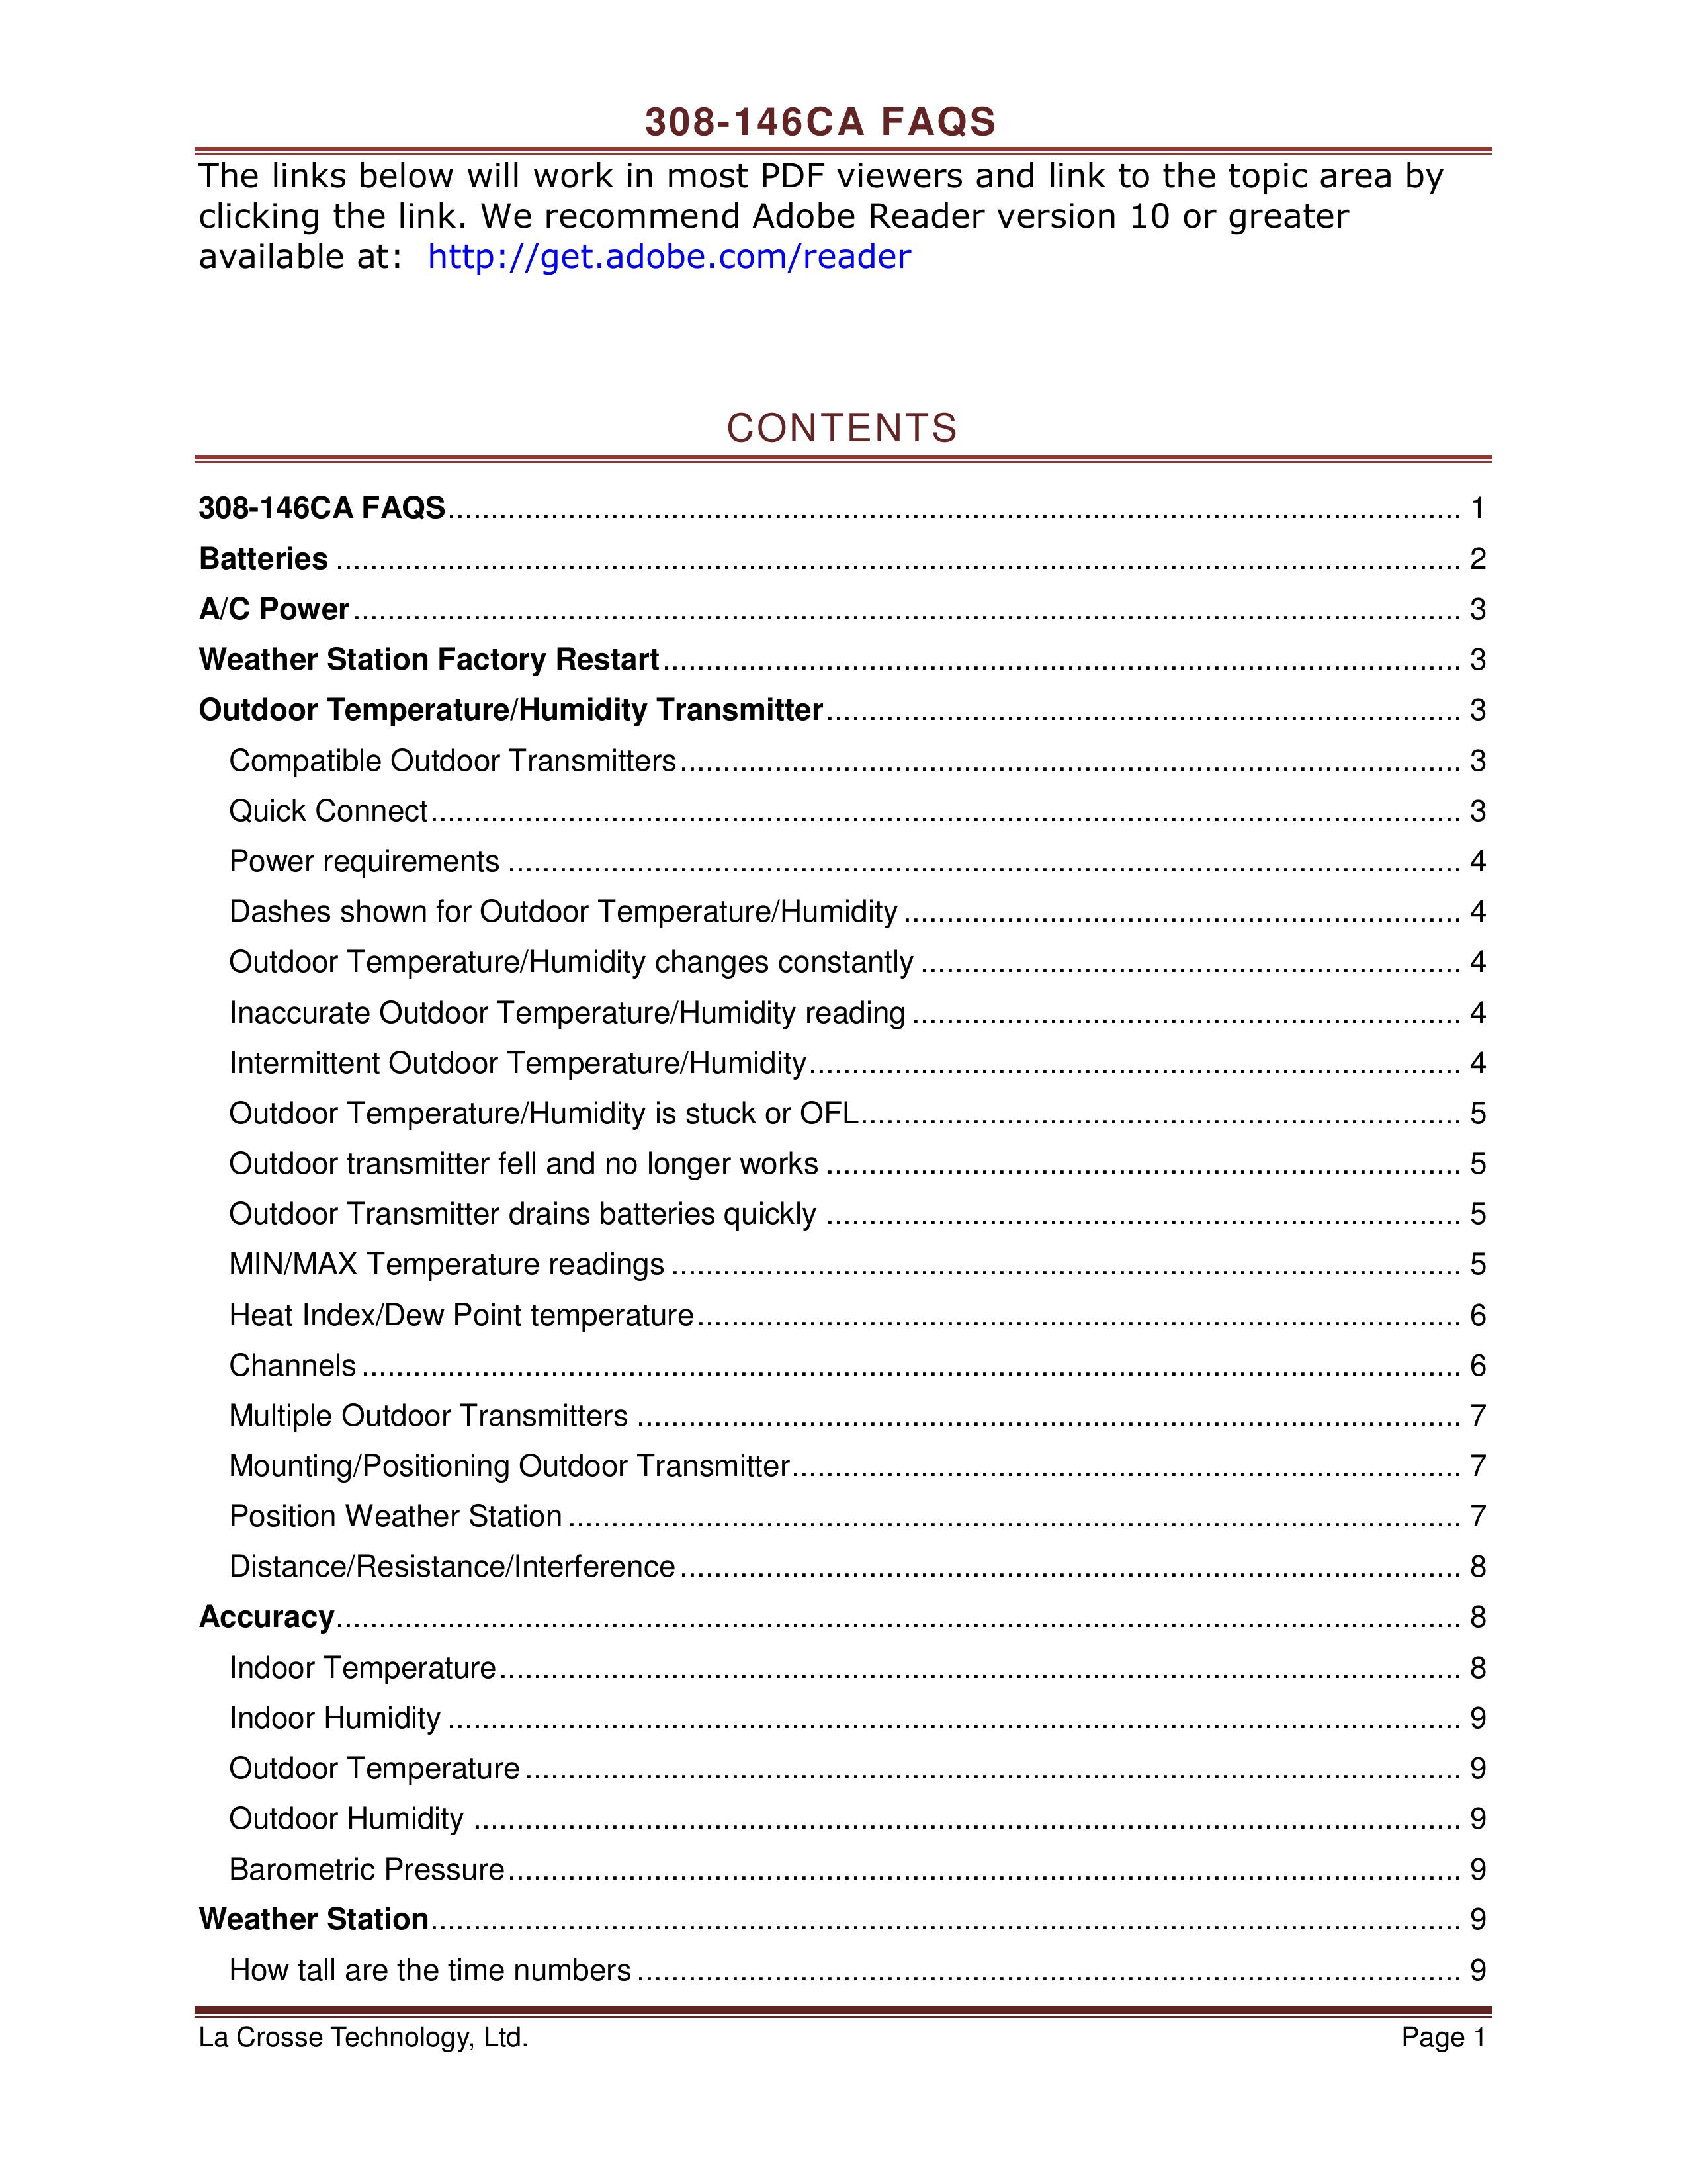 La Crosse Technology 308-146CA Weather Radio User Manual